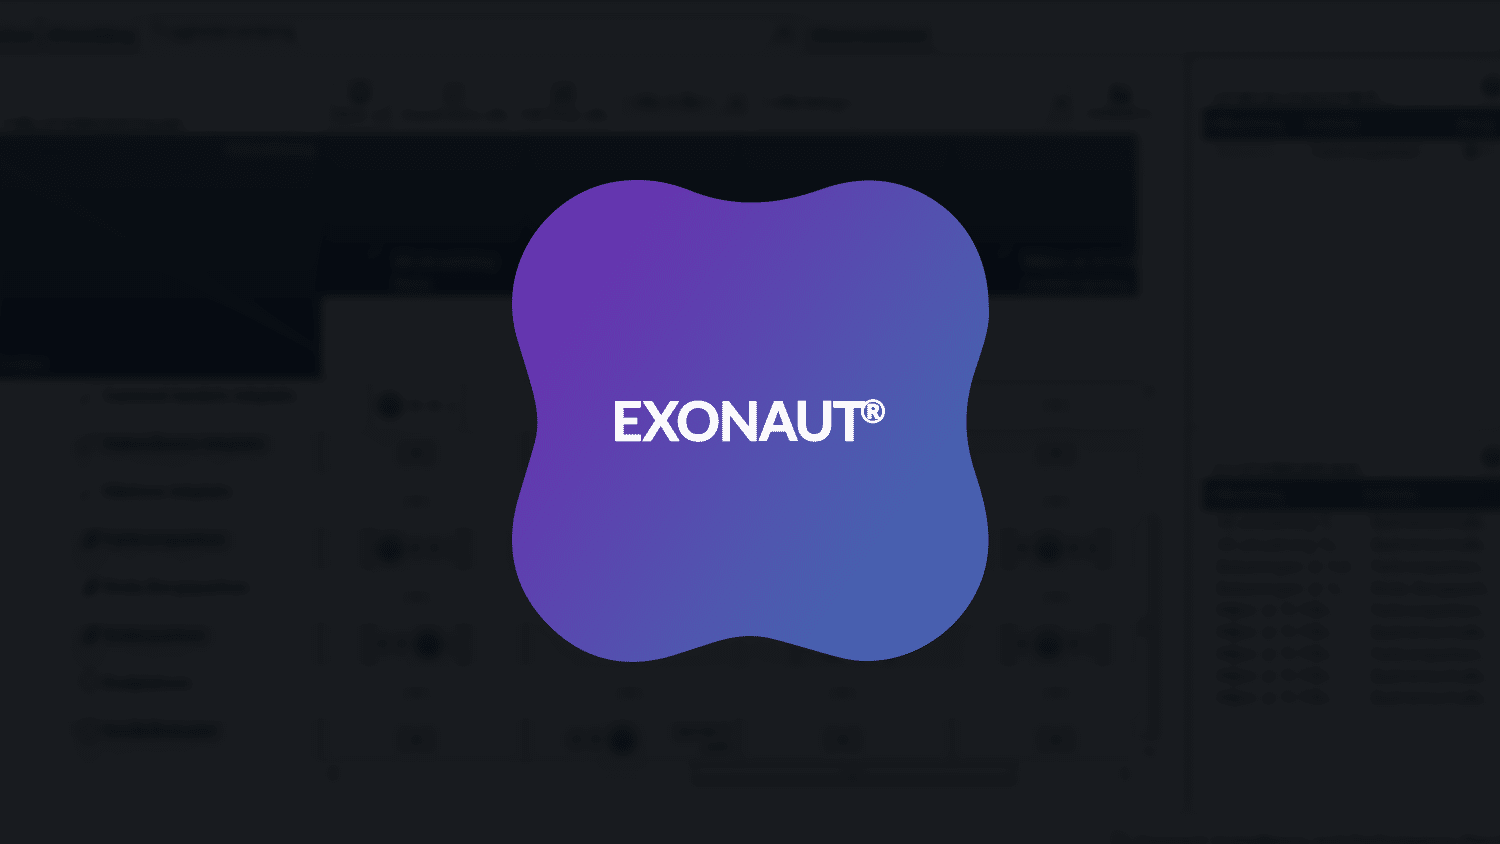 Exonaut software logo